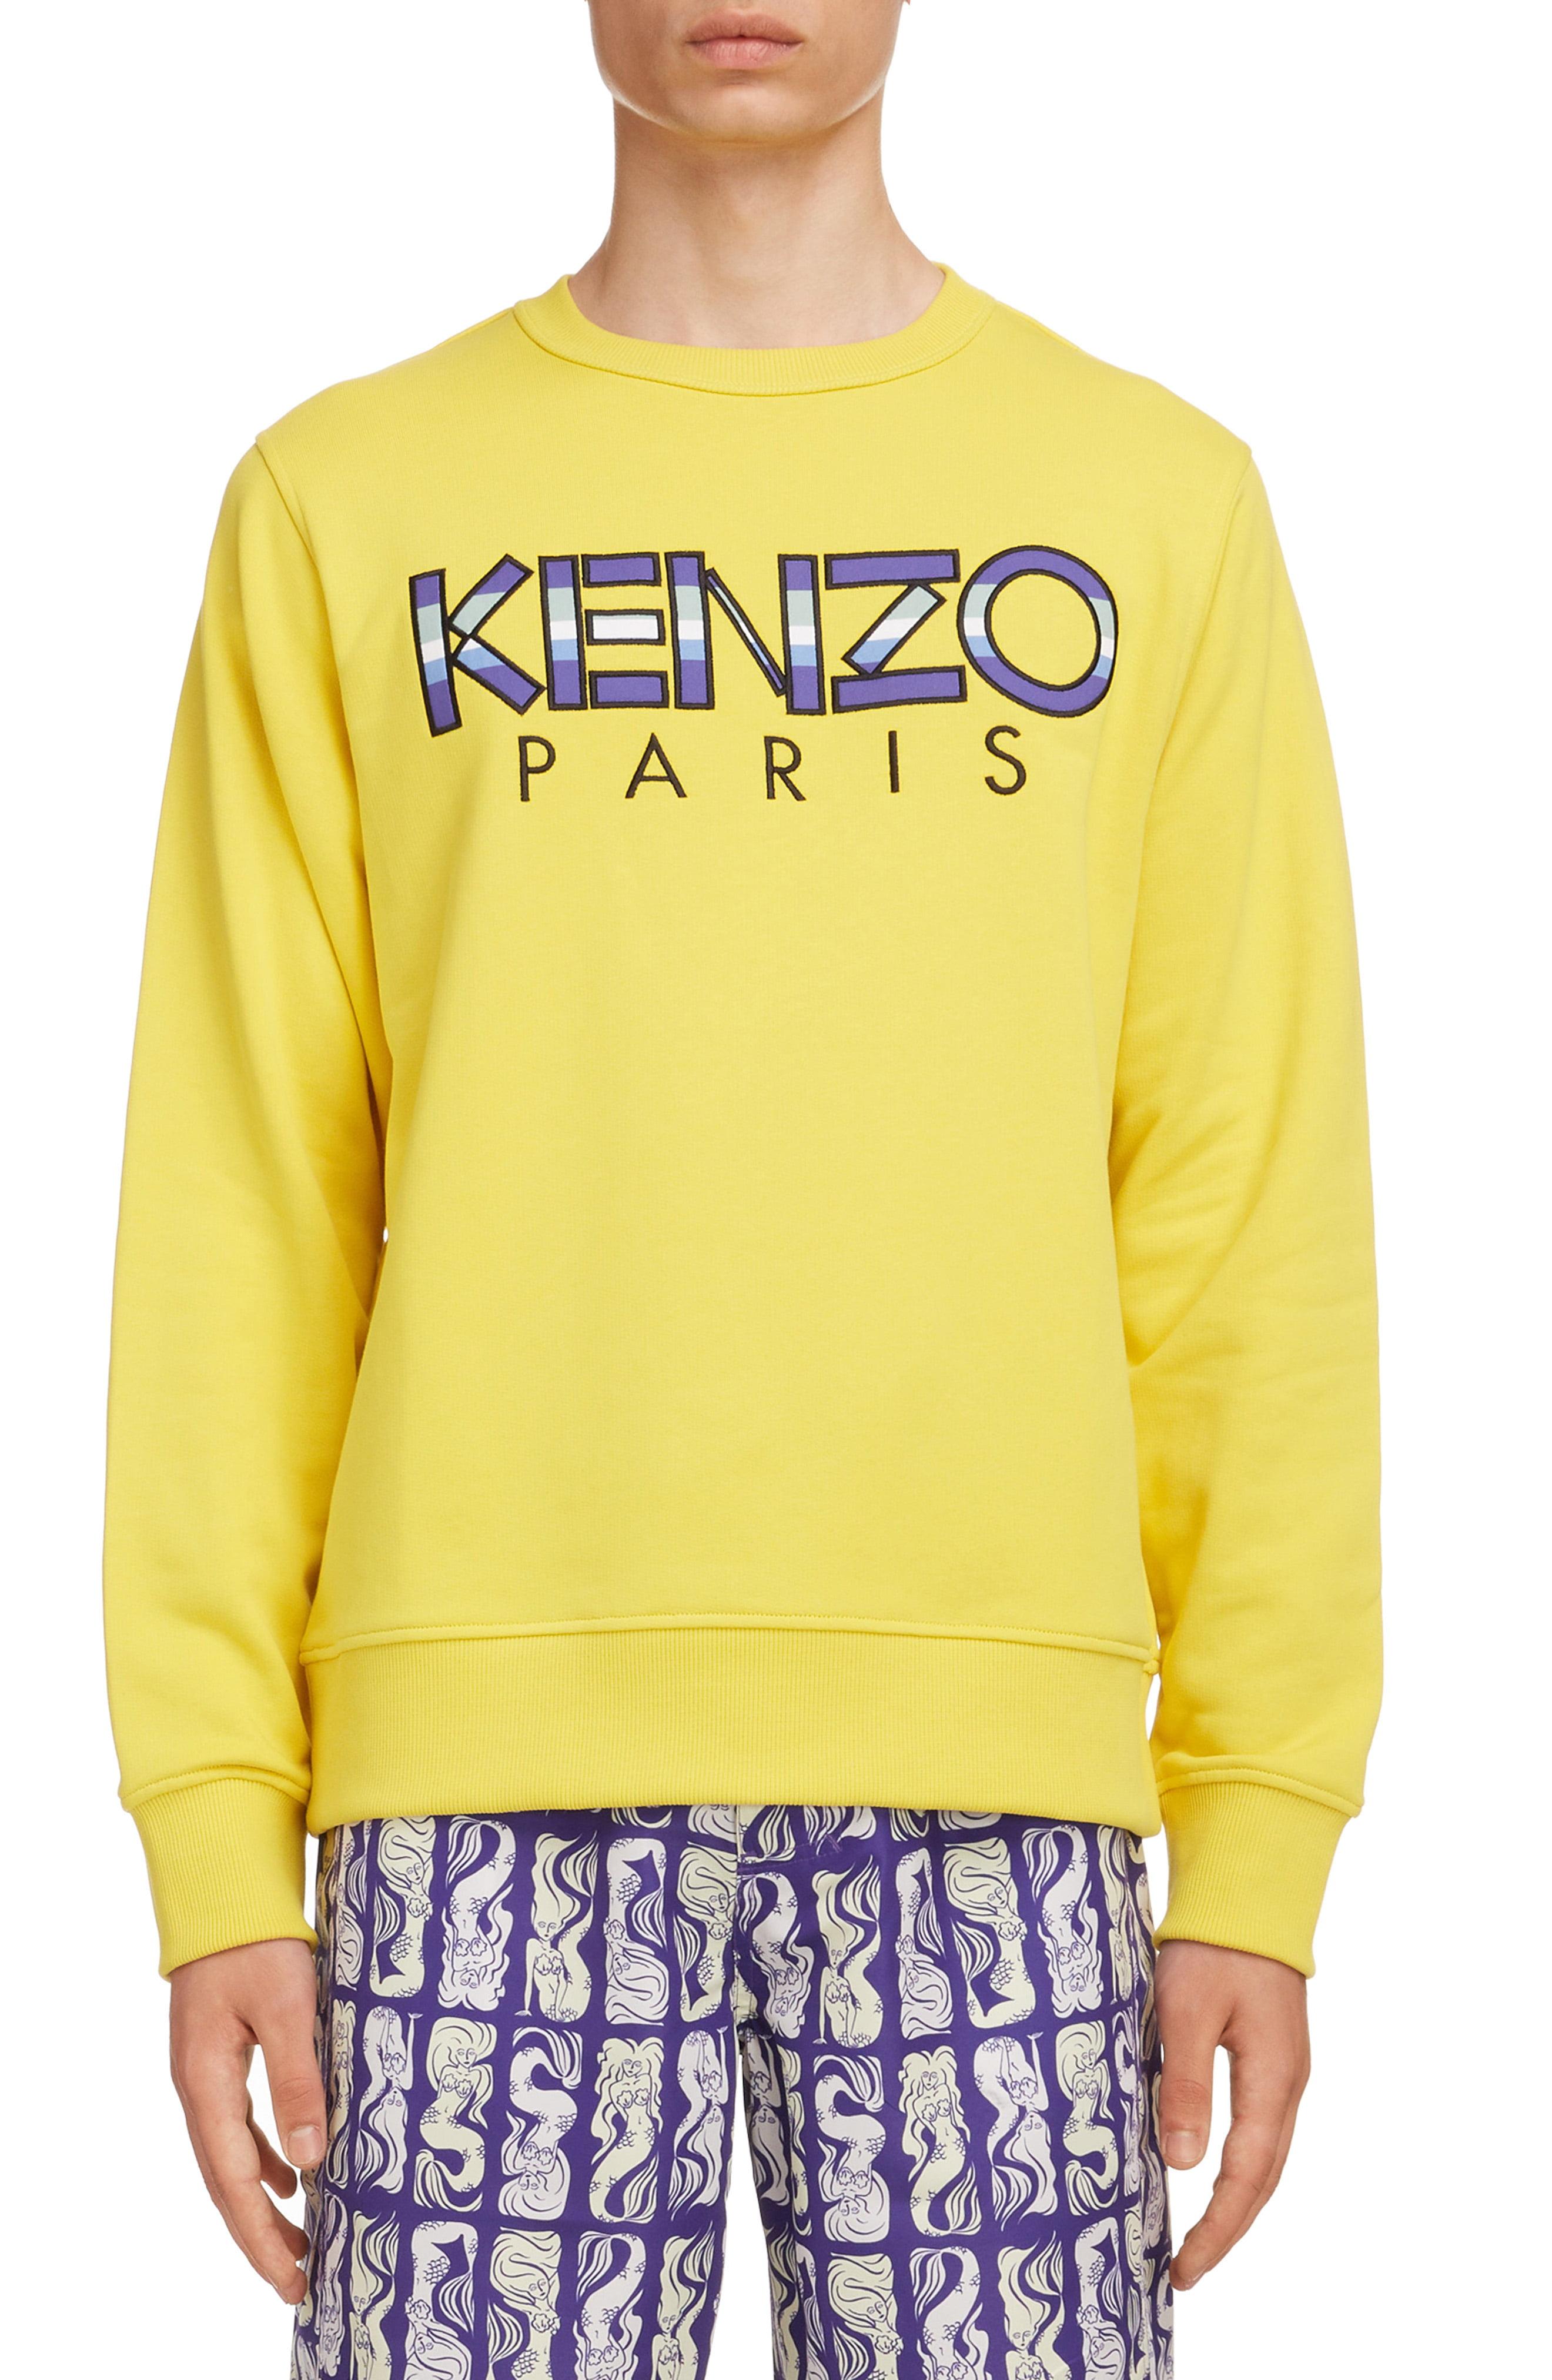 KENZO Cotton Paris Crewneck Sweatshirt in Lemon (Yellow) for Men - Lyst